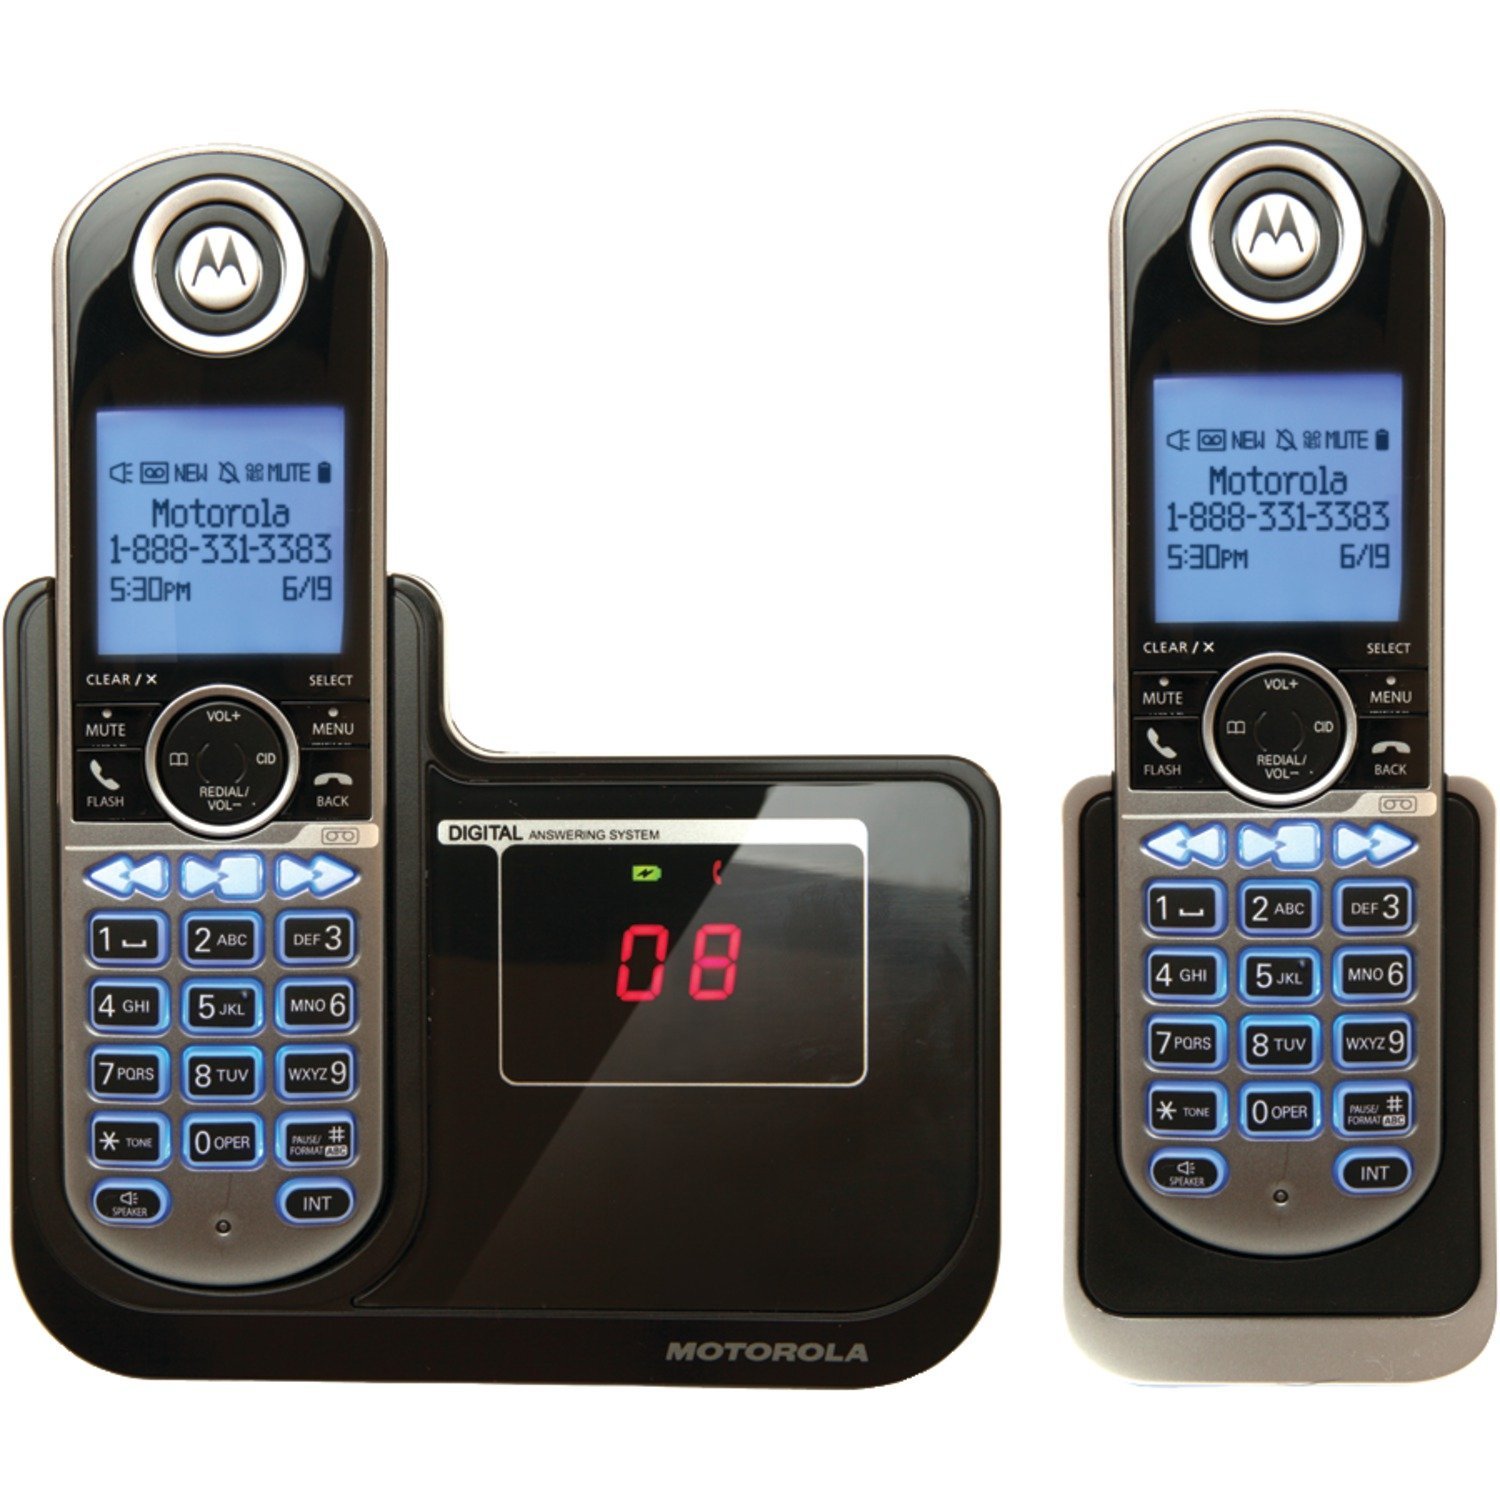 Motorola P1002 DECT 6.0 Cordless Phone with Diagonal Display - image 1 of 2